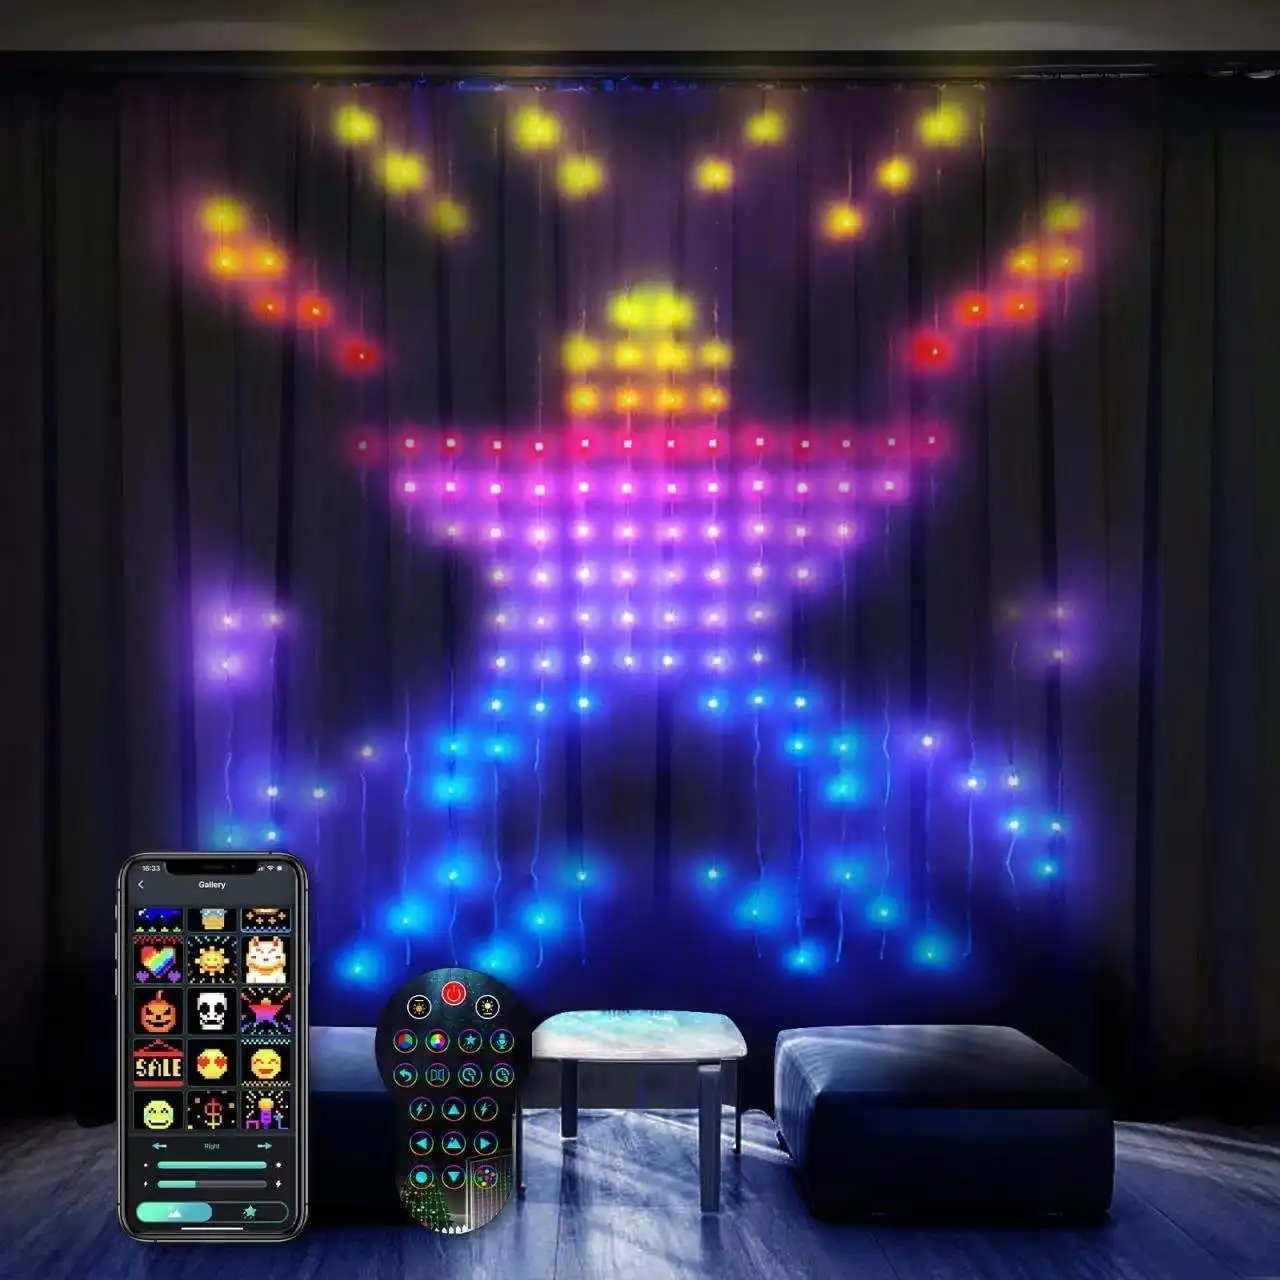 APP โปรแกรมการควบคุมระยะไกลสมาร์ทตกแต่งคริสต์มาส Fairy ผ้าม่านแสงพิกเซล DIY ปาร์ตี้ RGB Fairy Light